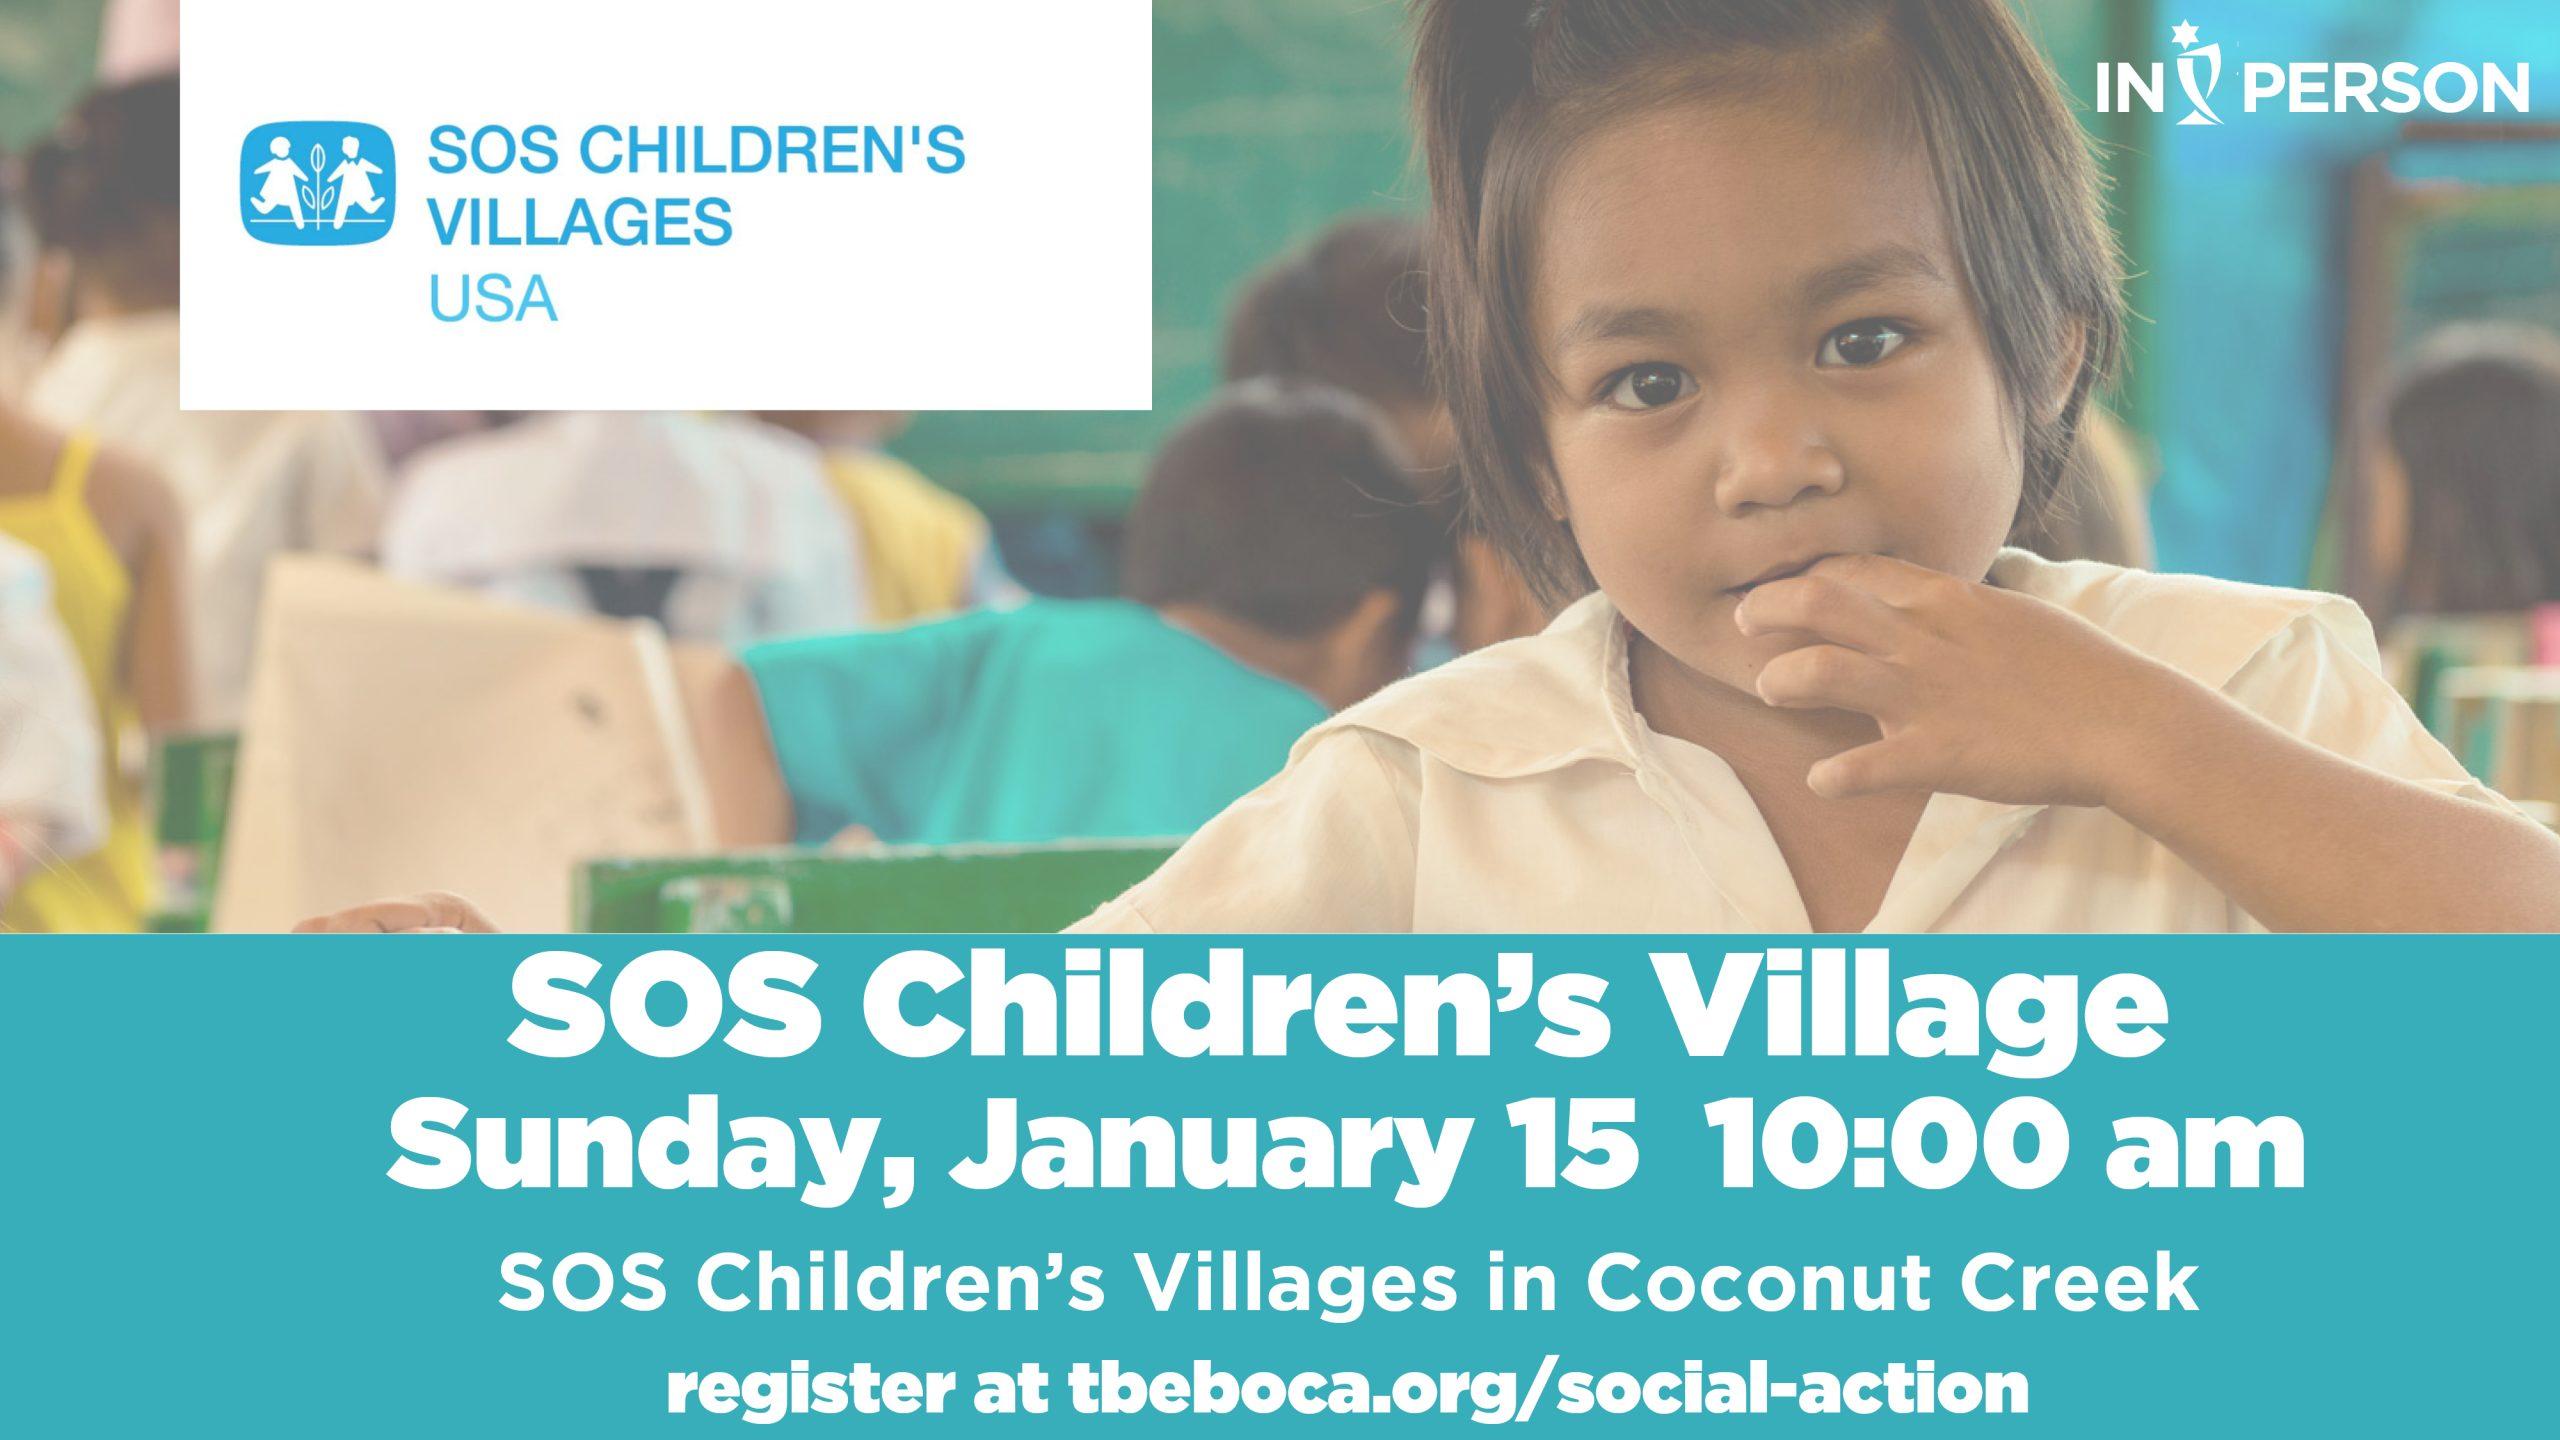 Join members of Temple Beth El volunteering at the SOS Children’s Villages in Coconut Creek. SOS Children’s Villages care for vulnerable children